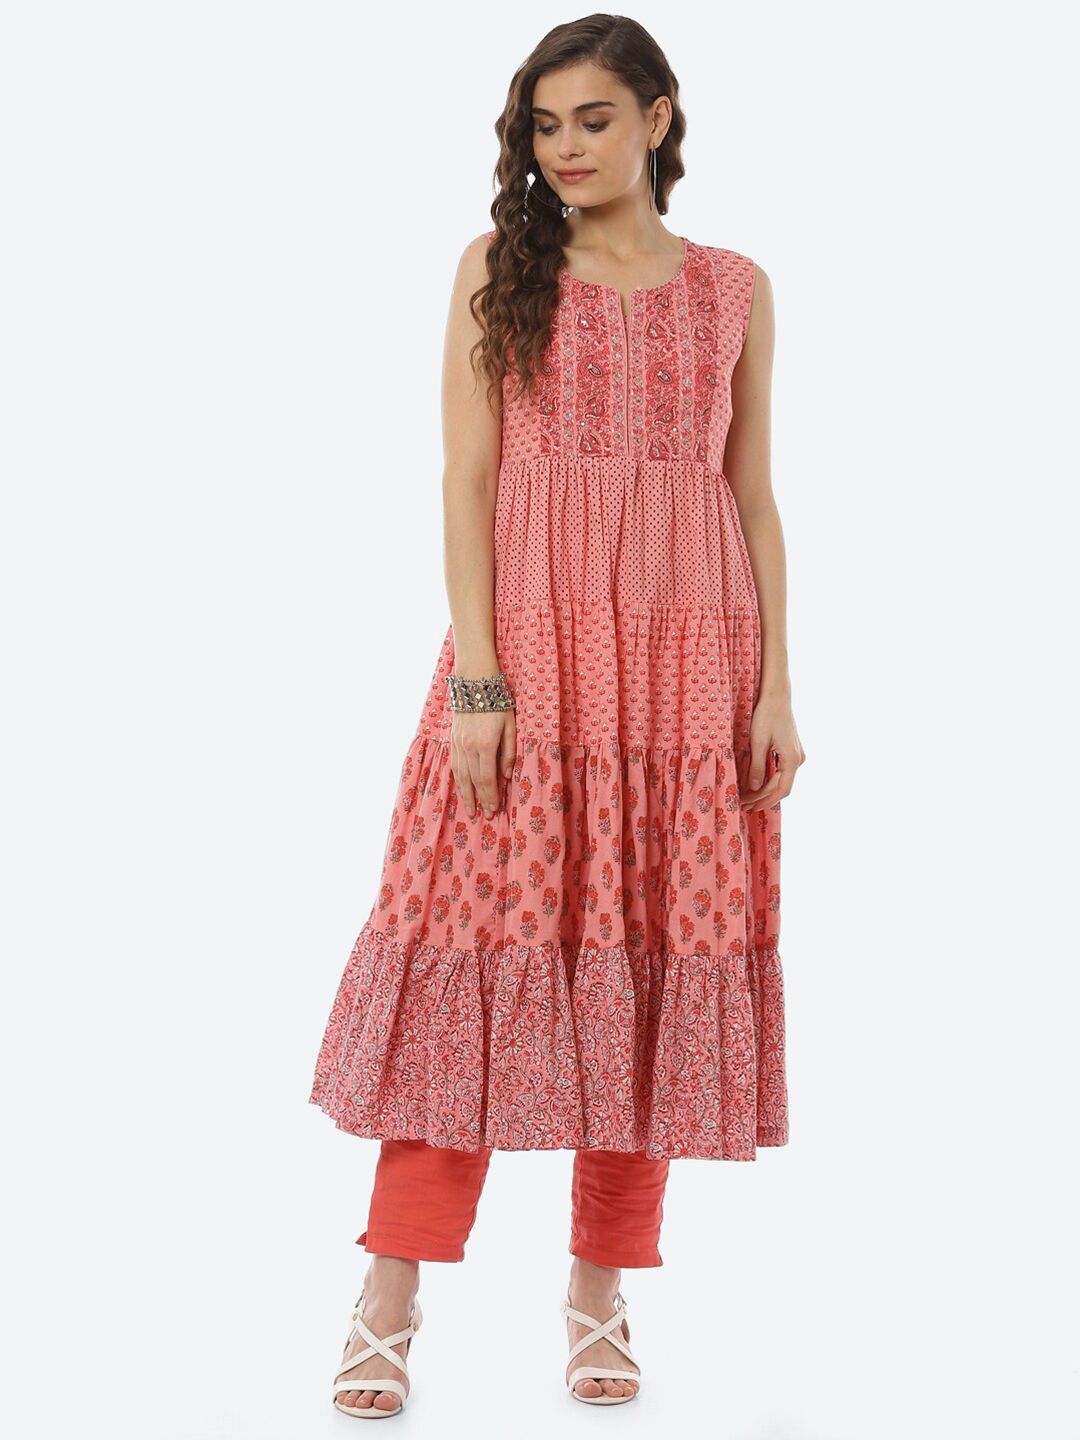 Biba Pink & White Ethnic Motifs Printed Tiered Cotton Midi Dress Price in India